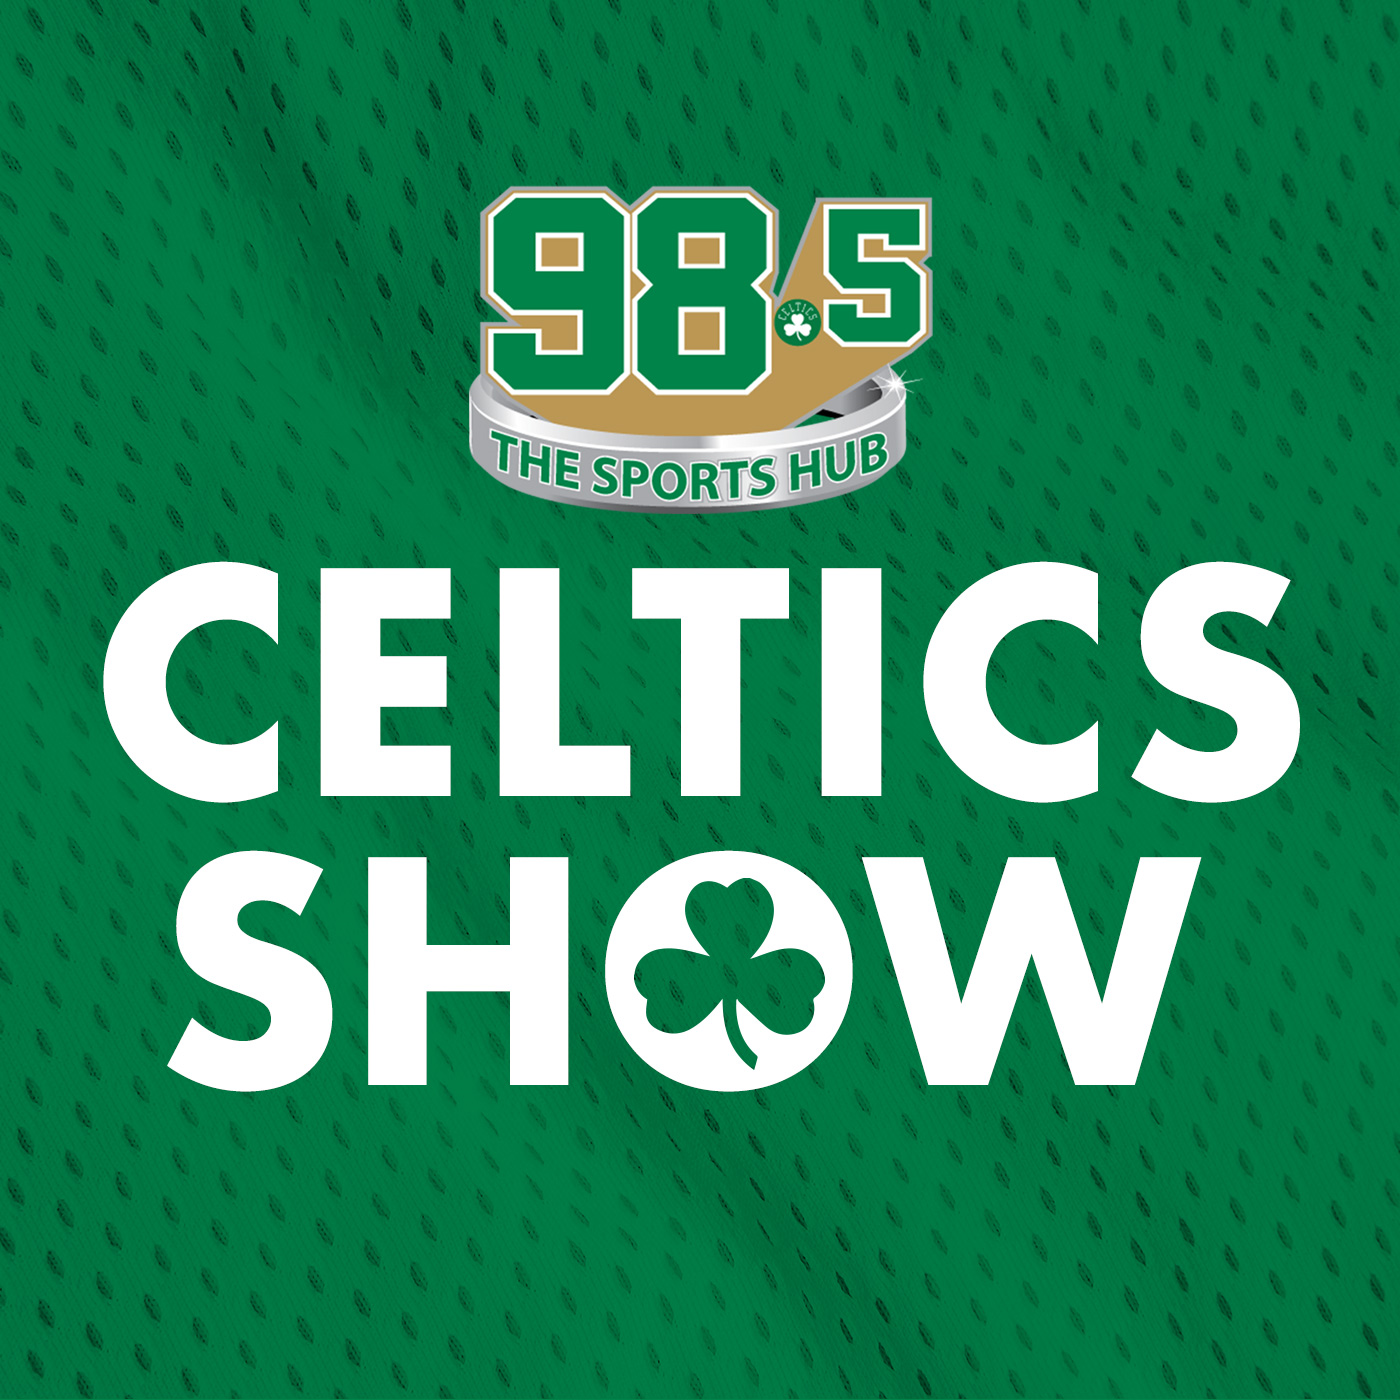 Celtics vs. Heat Series Breakdown // TD Garden Advantage // Callers Share Celtics Thoughts — 5/27